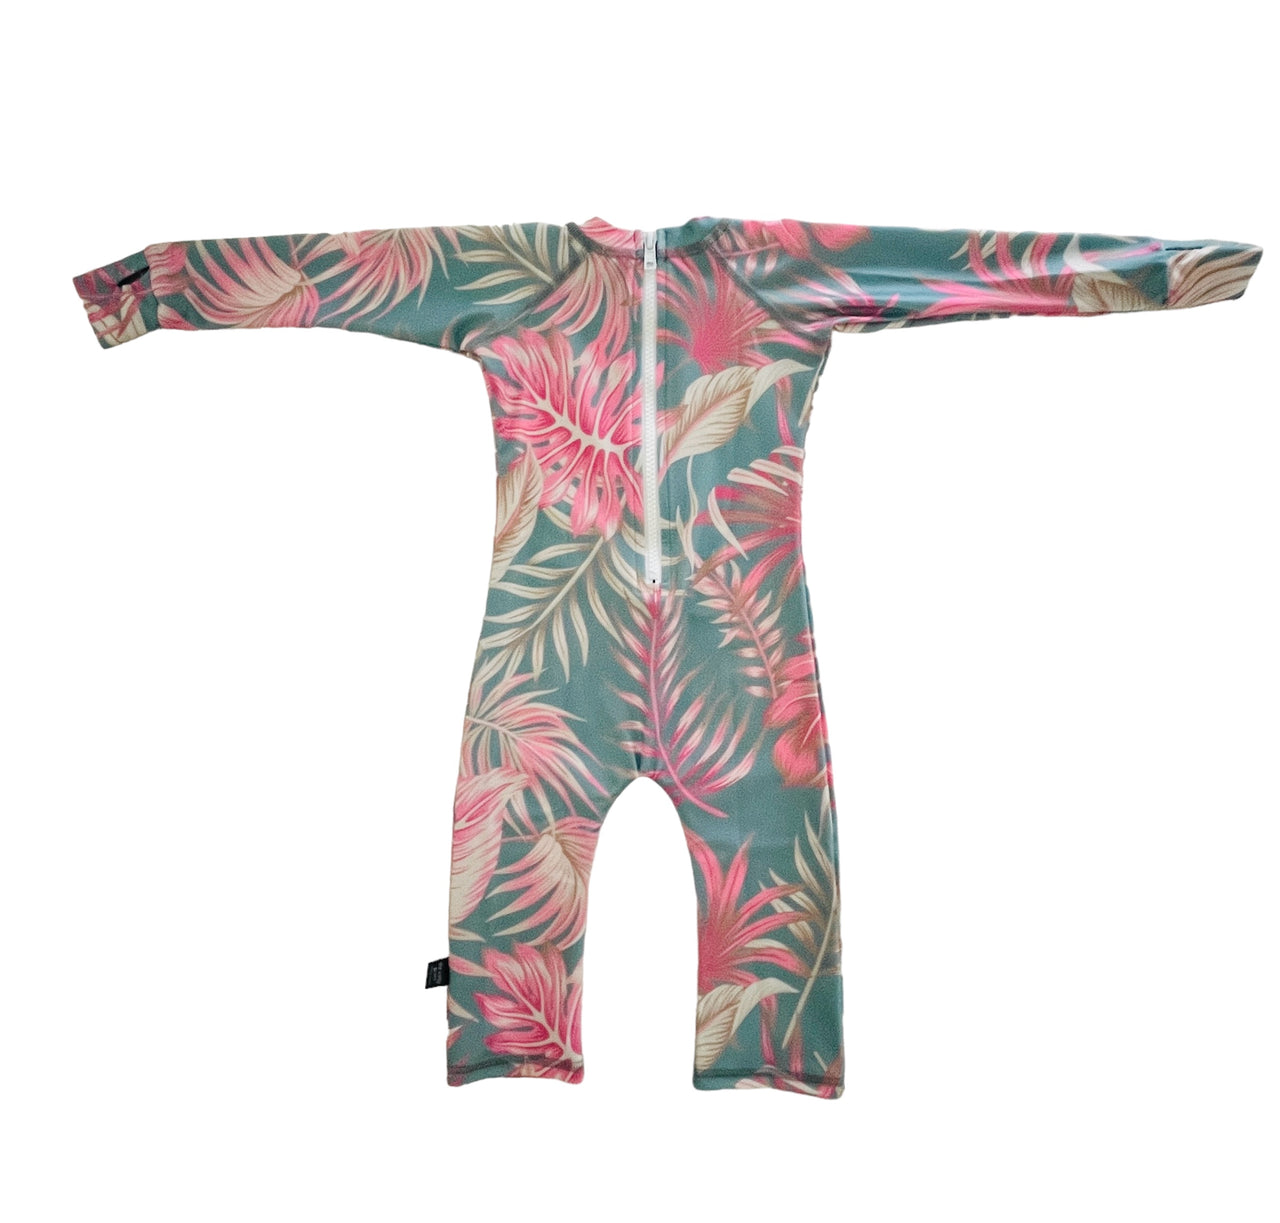 Infant/Toddler Full Suit